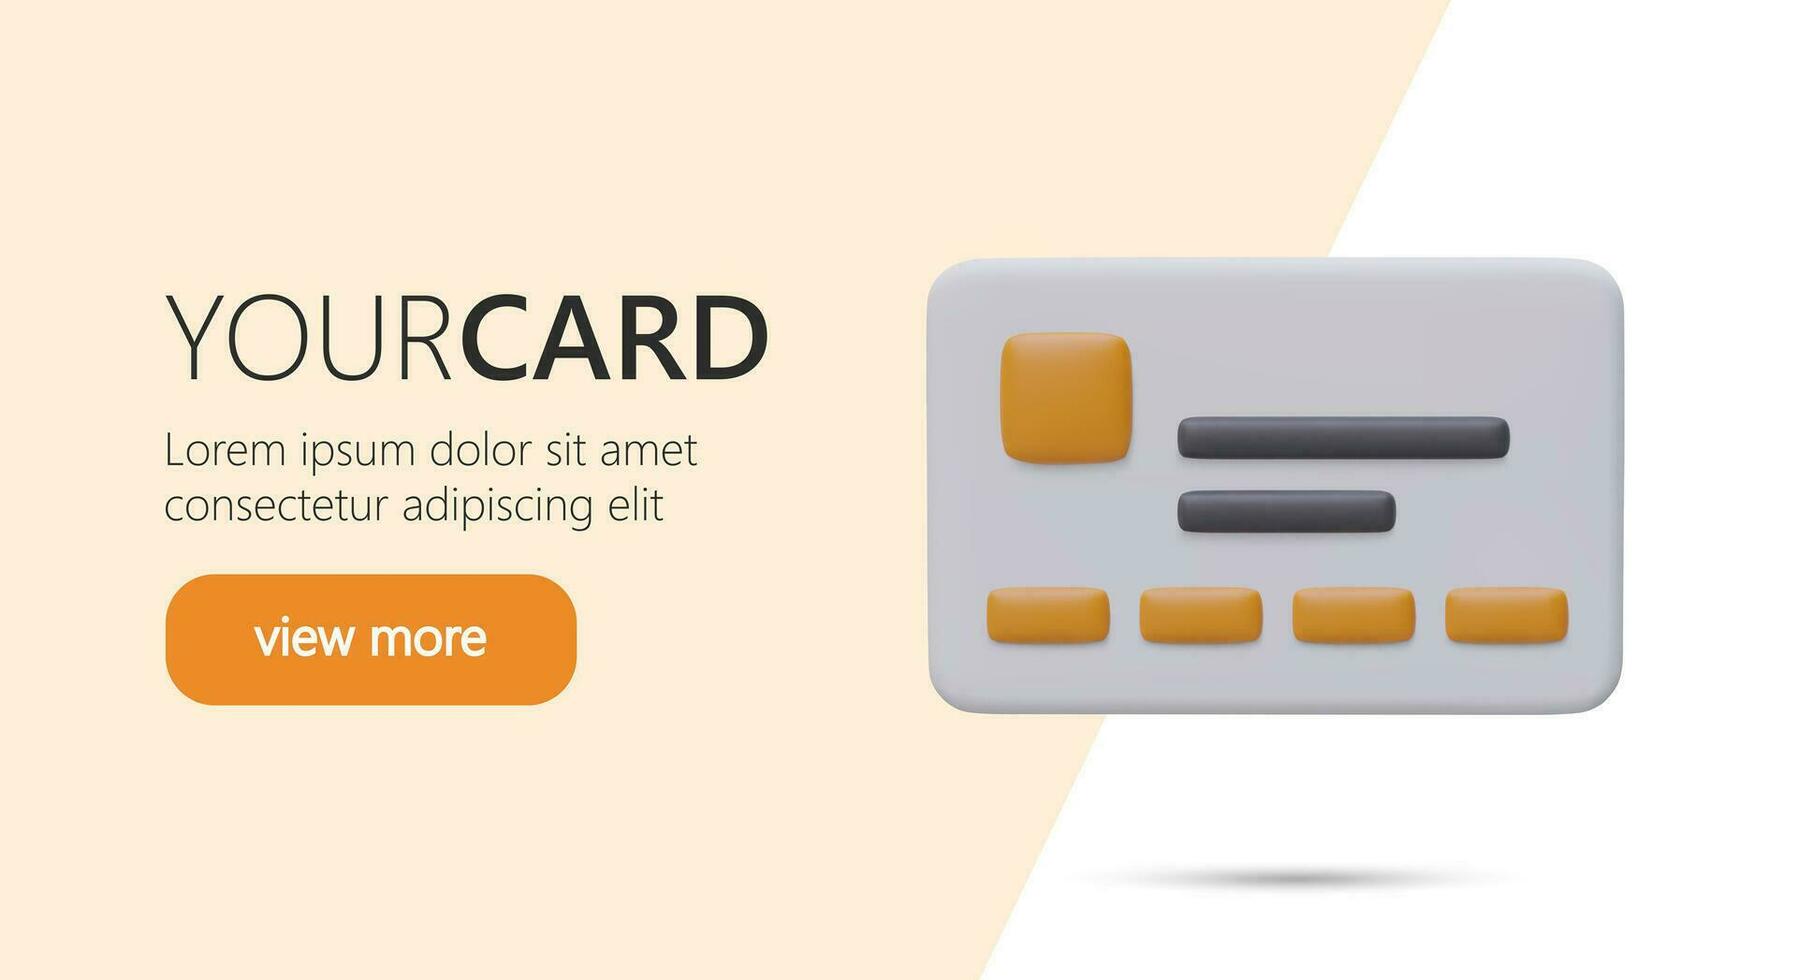 horizontal modelo para publicidad no efectivo pagos 3d crédito tarjeta con sombra vector